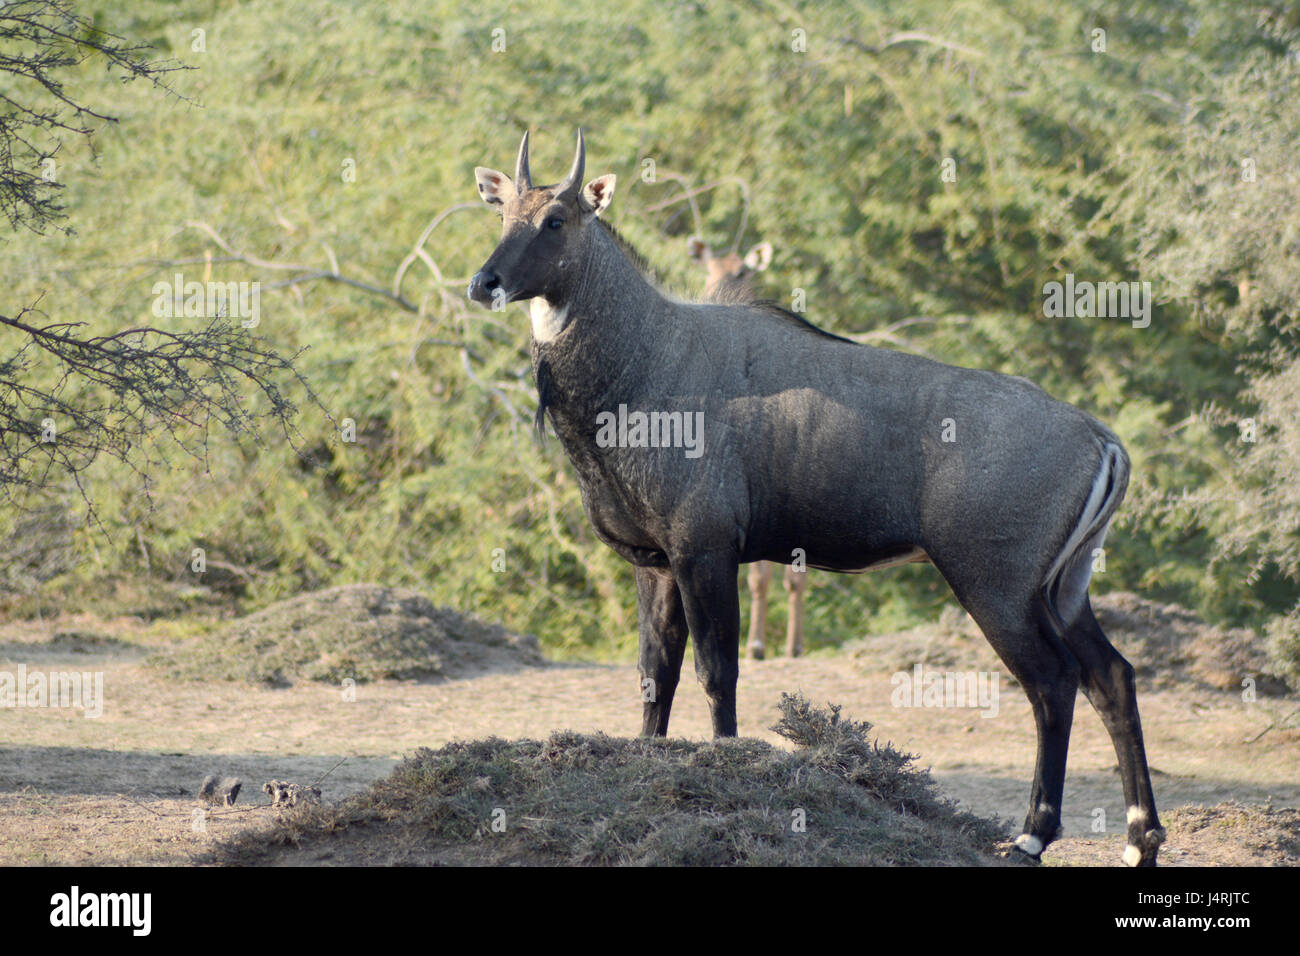 Nilgai - Blue Bull of India Stock Photo - Alamy